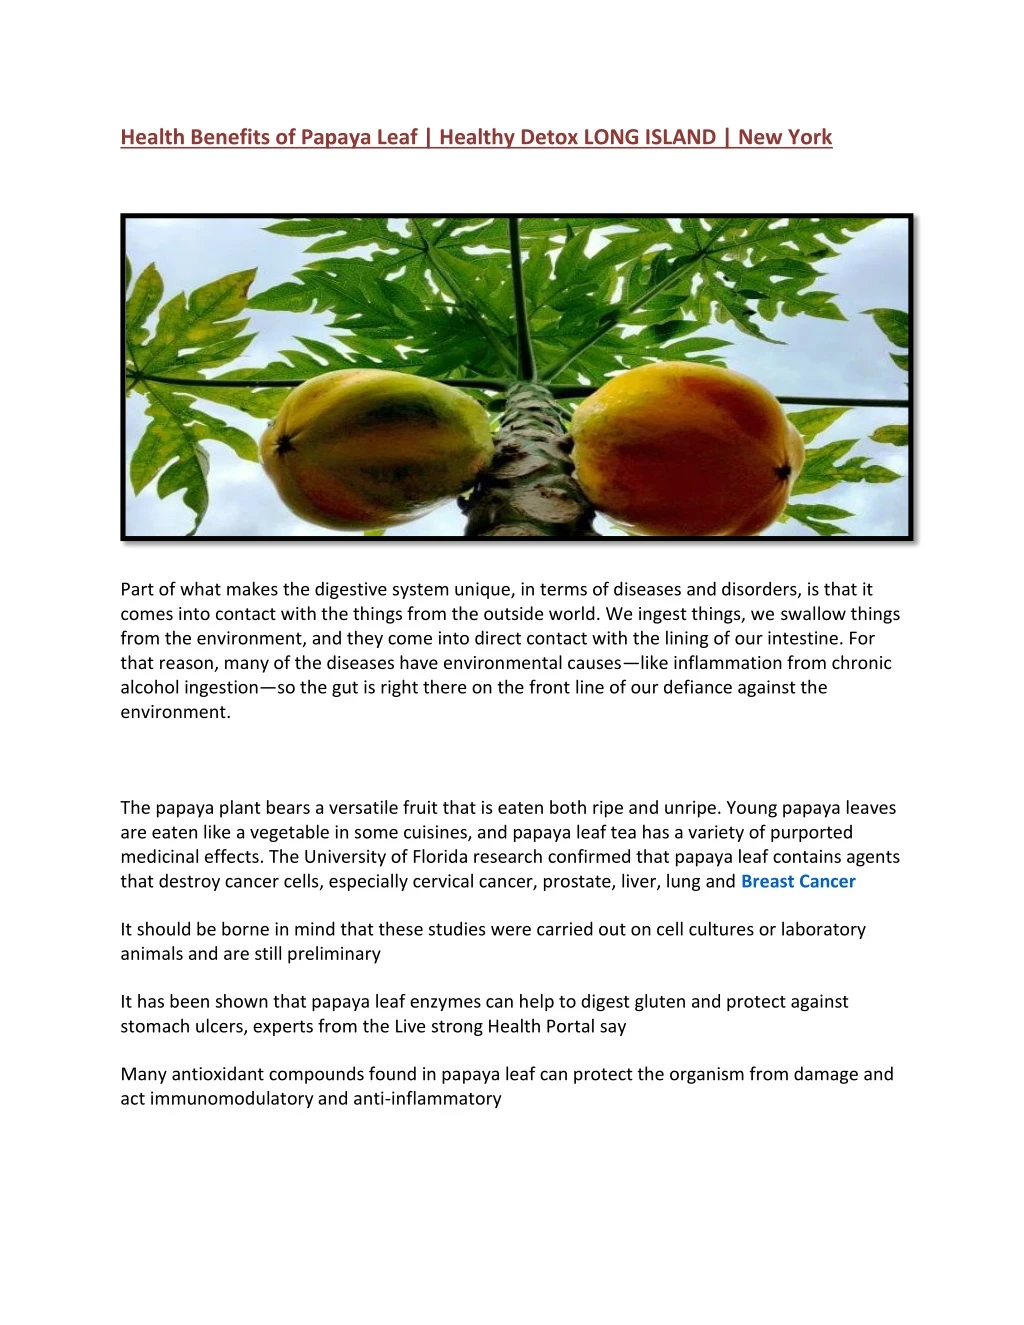 health benefits of papaya leaf healthy detox long